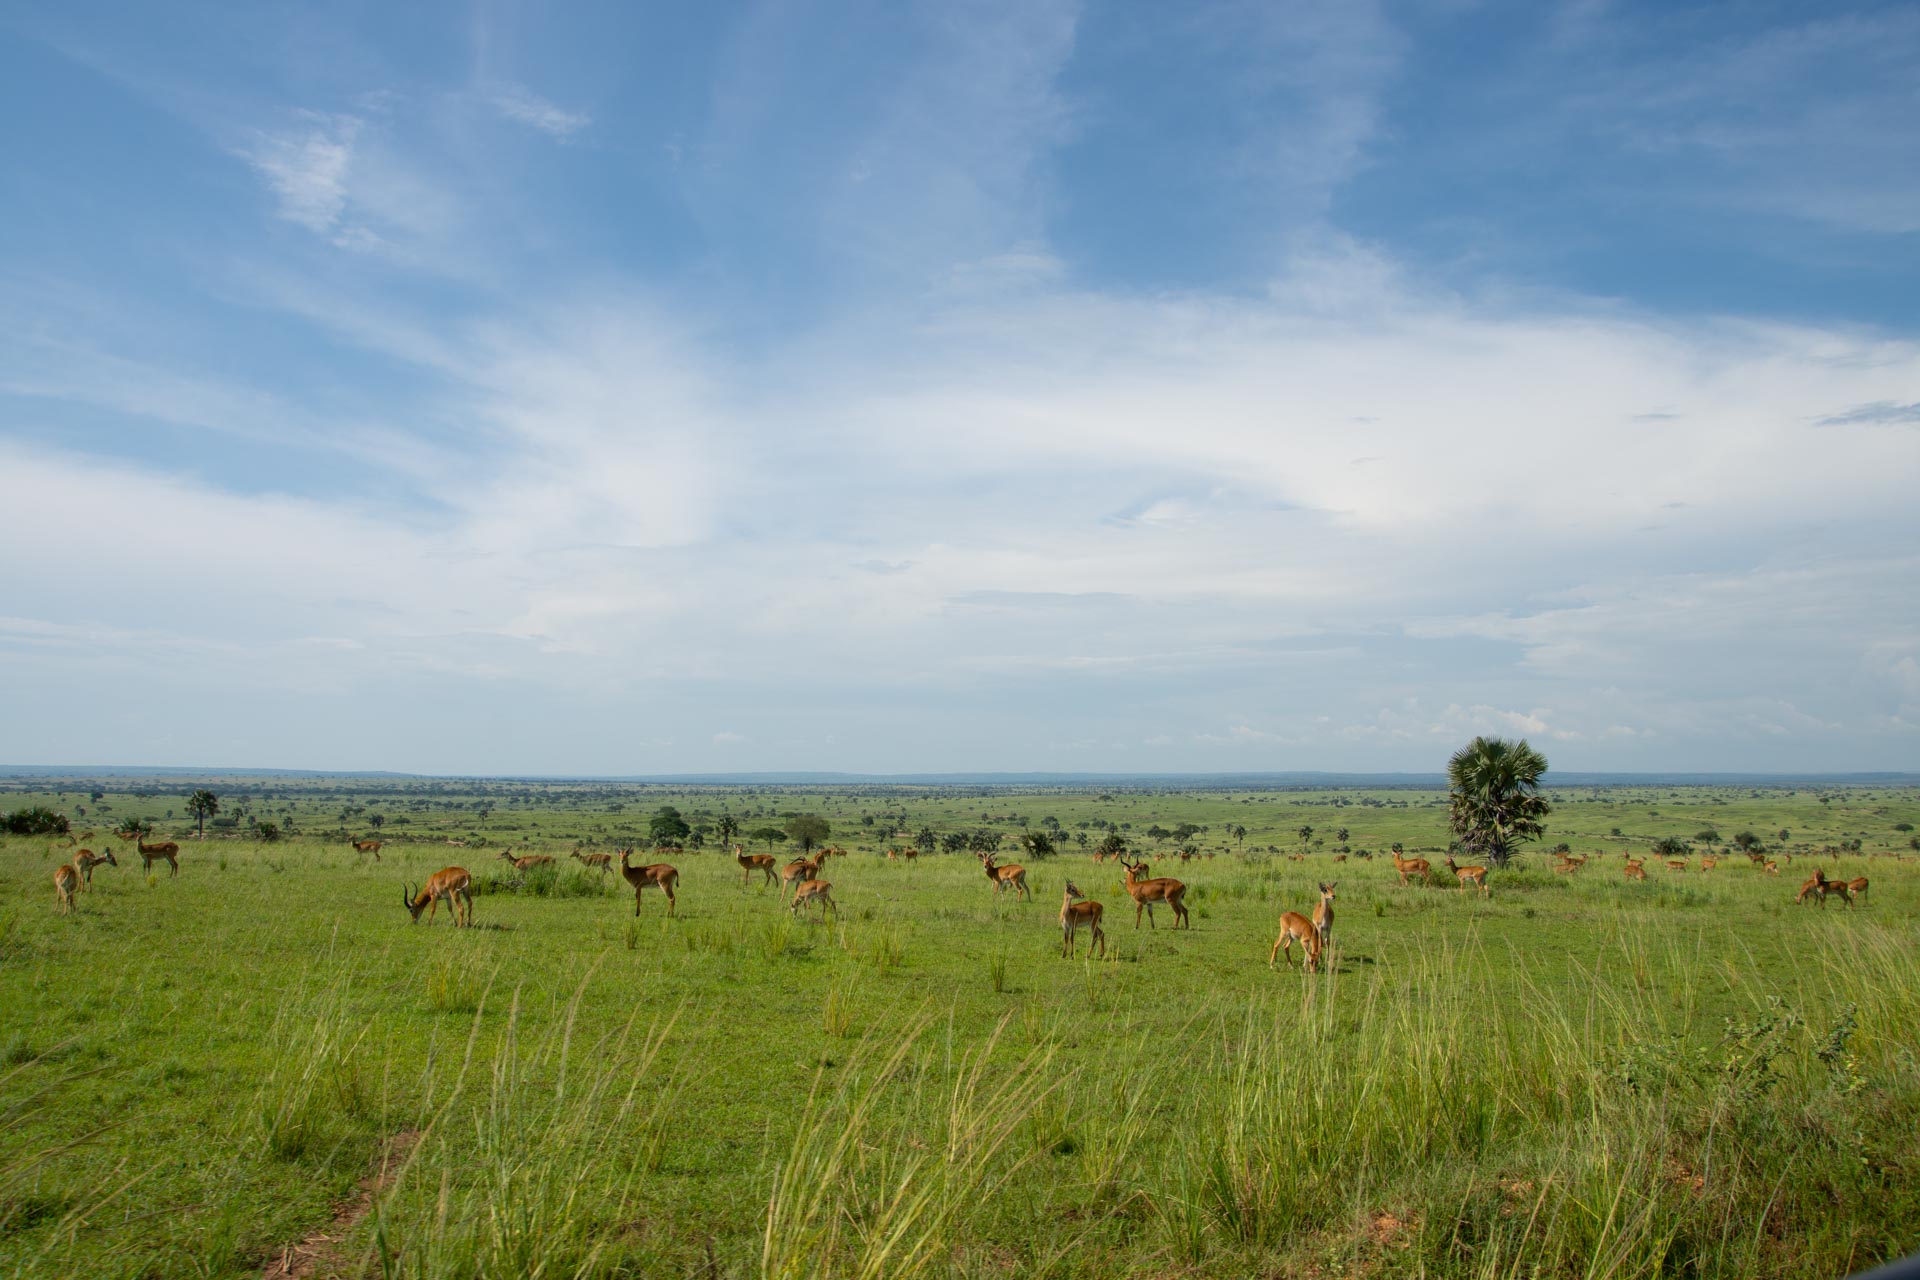 Murchison Falls Nationalpark in Uganda - Globetrotter Select